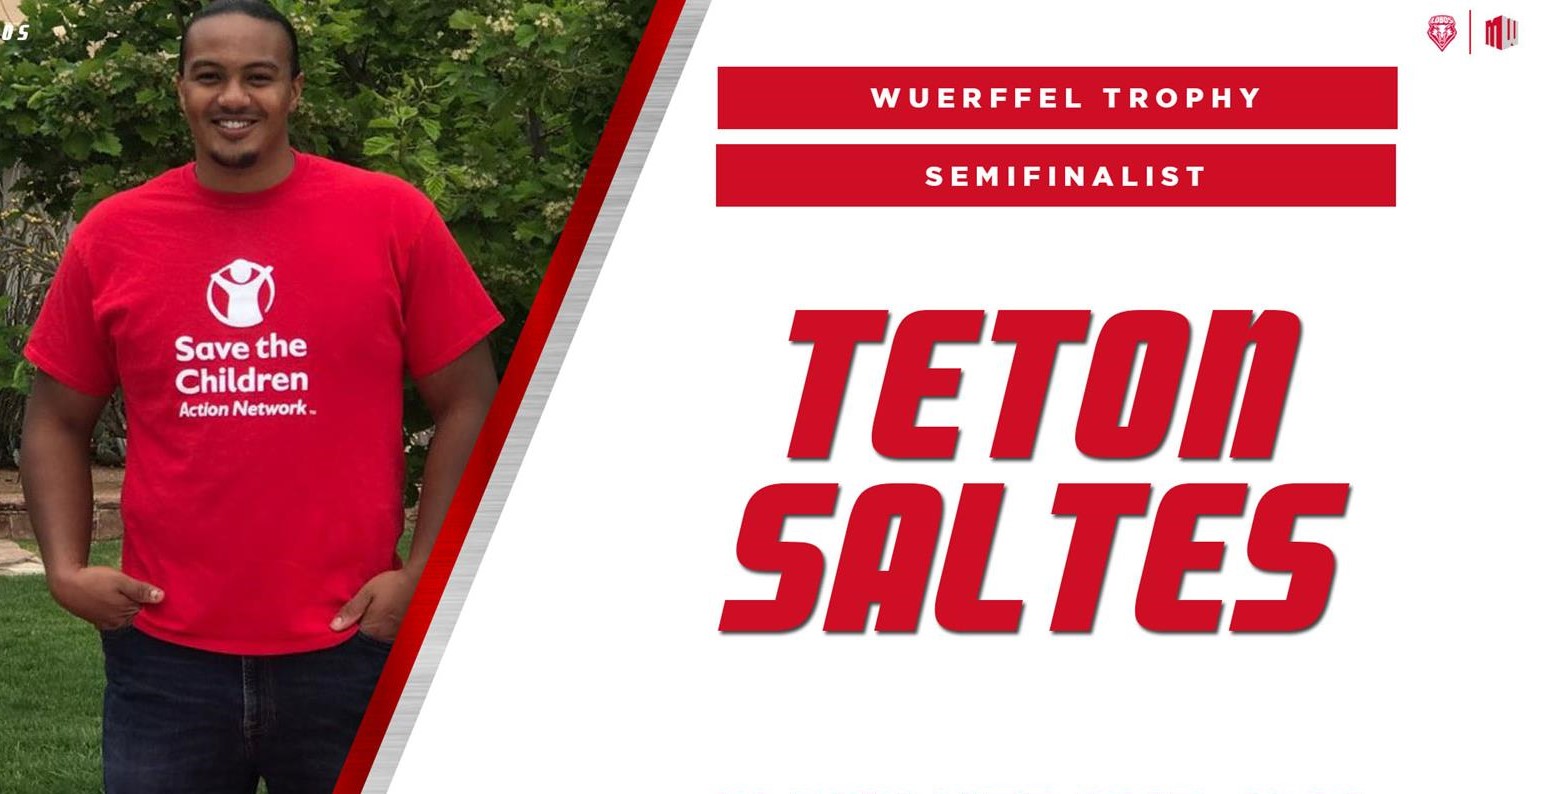 New Mexico Lineman Teton Saltes (Oglala Lakota) Named a Semifinalist for the Wuerffel Trophy